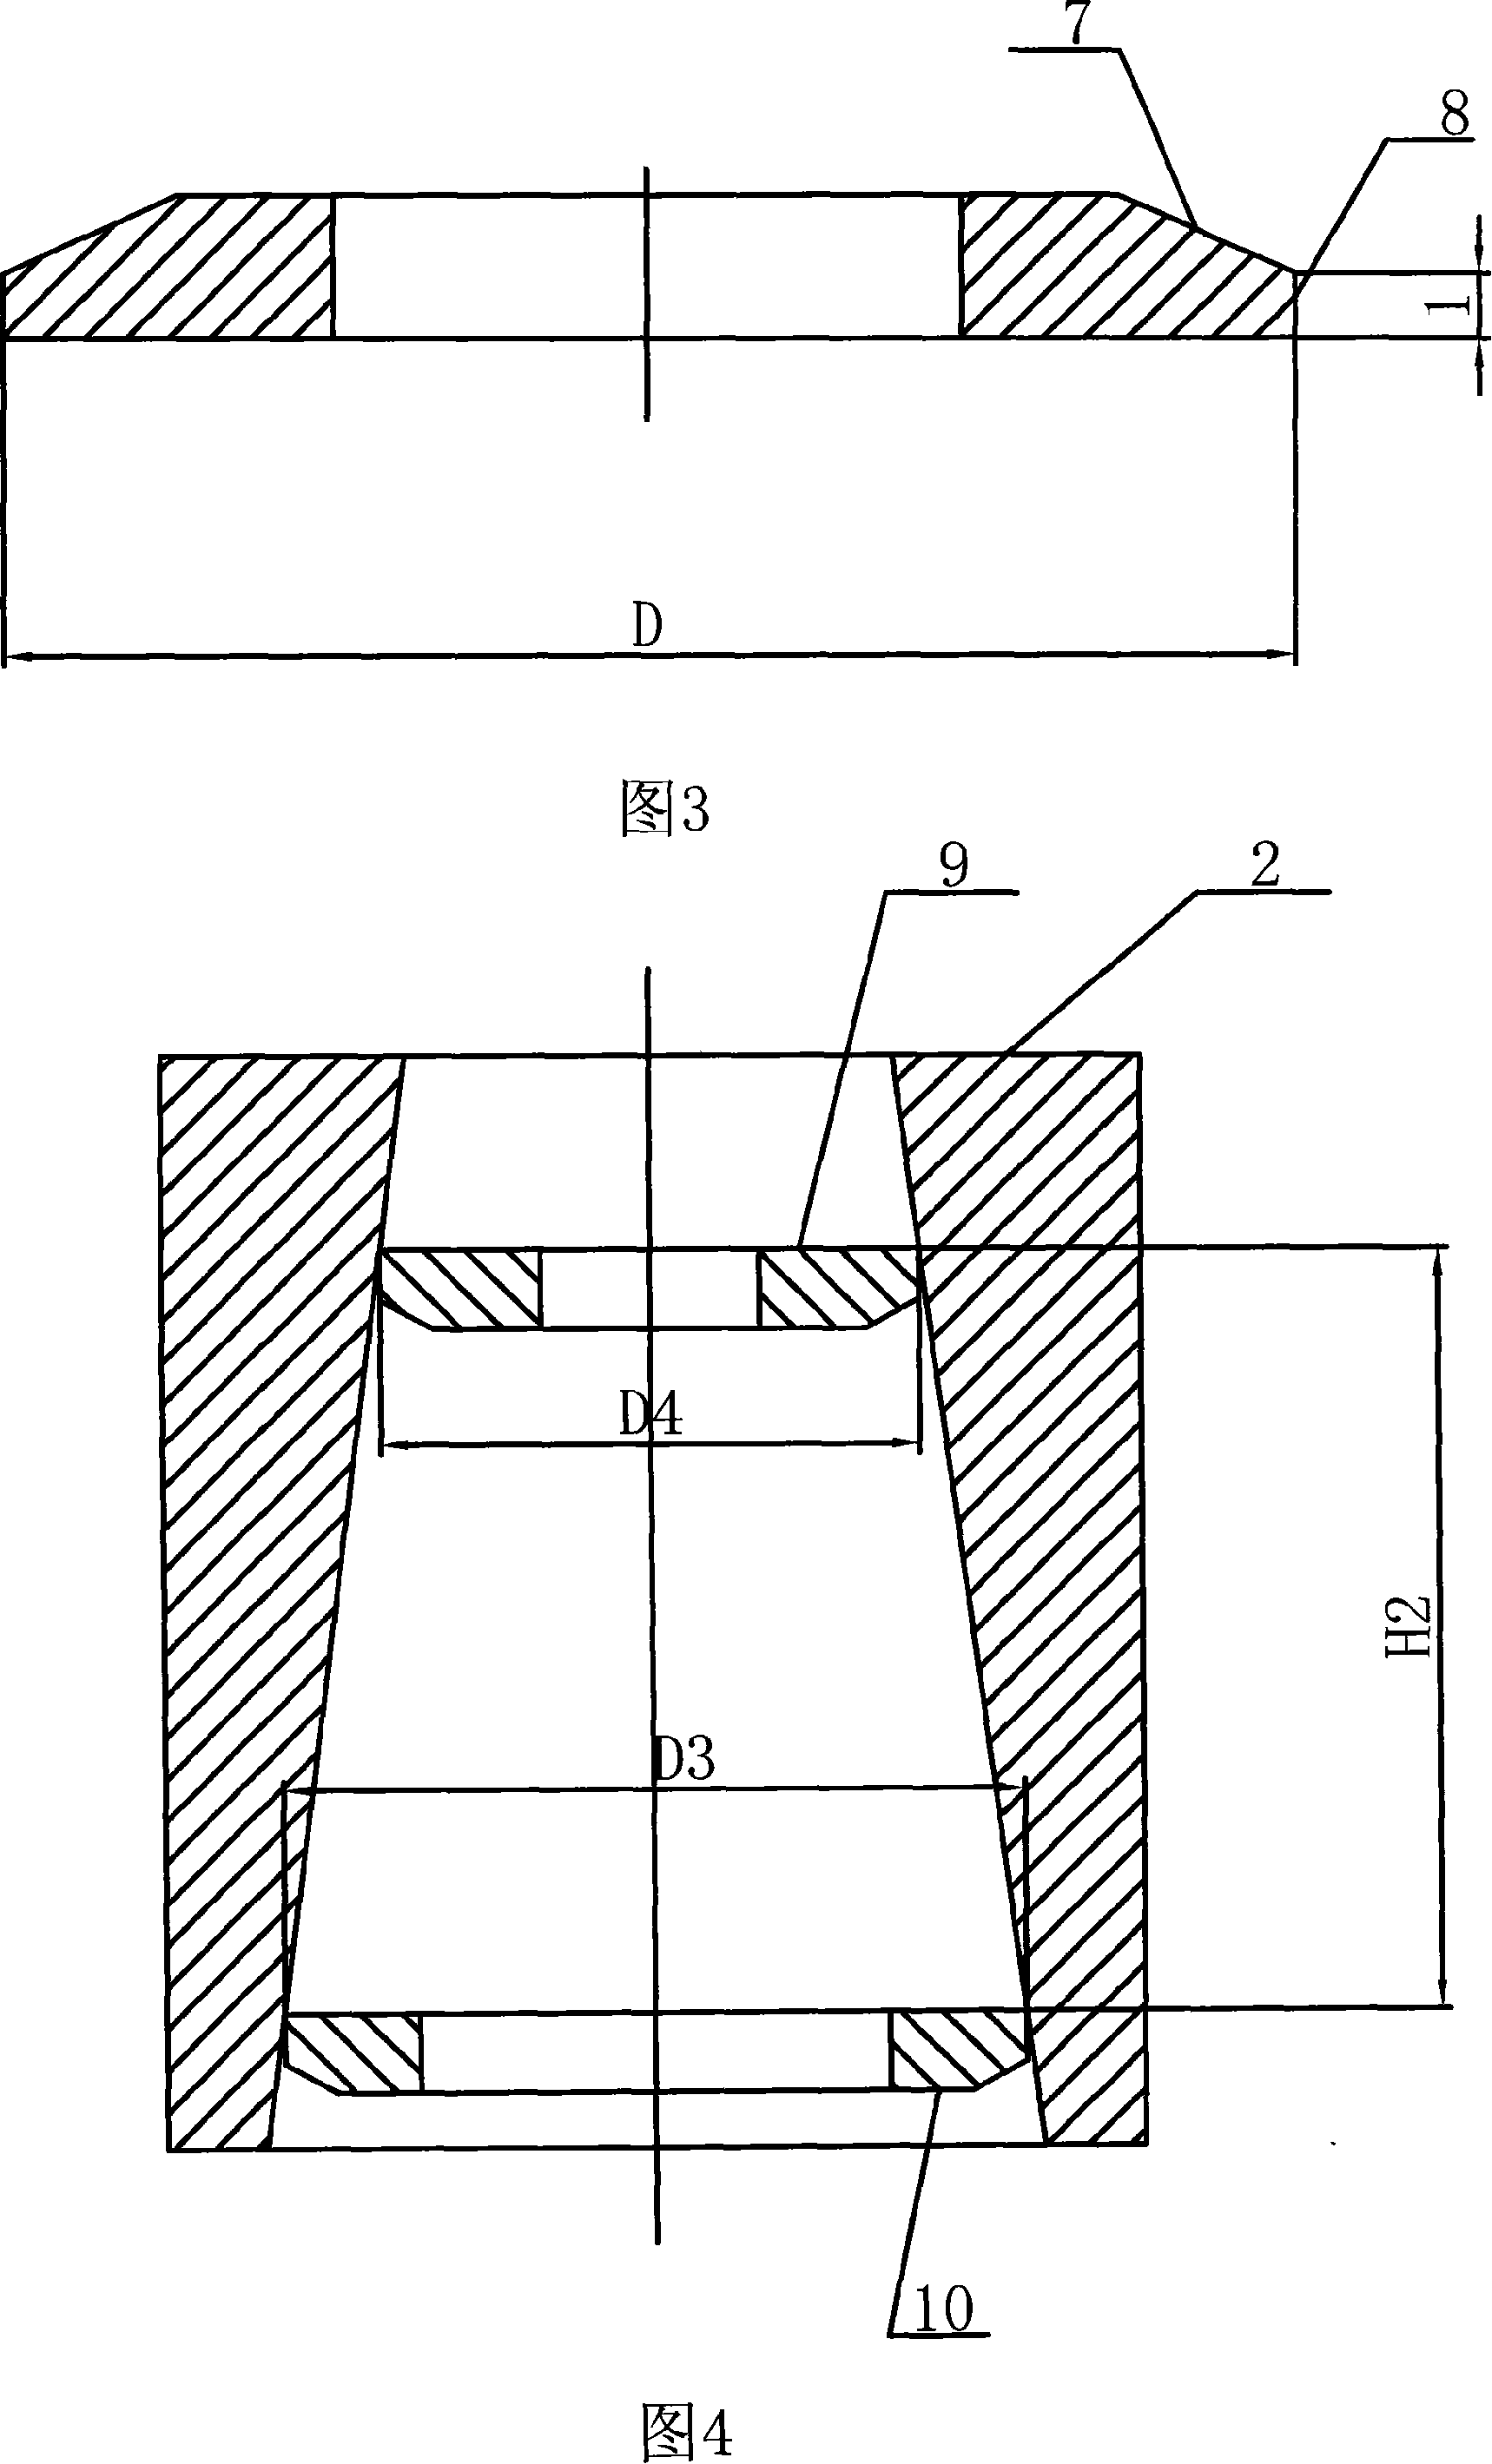 Method for measuring large-scale workpiece taper using ring-plane method